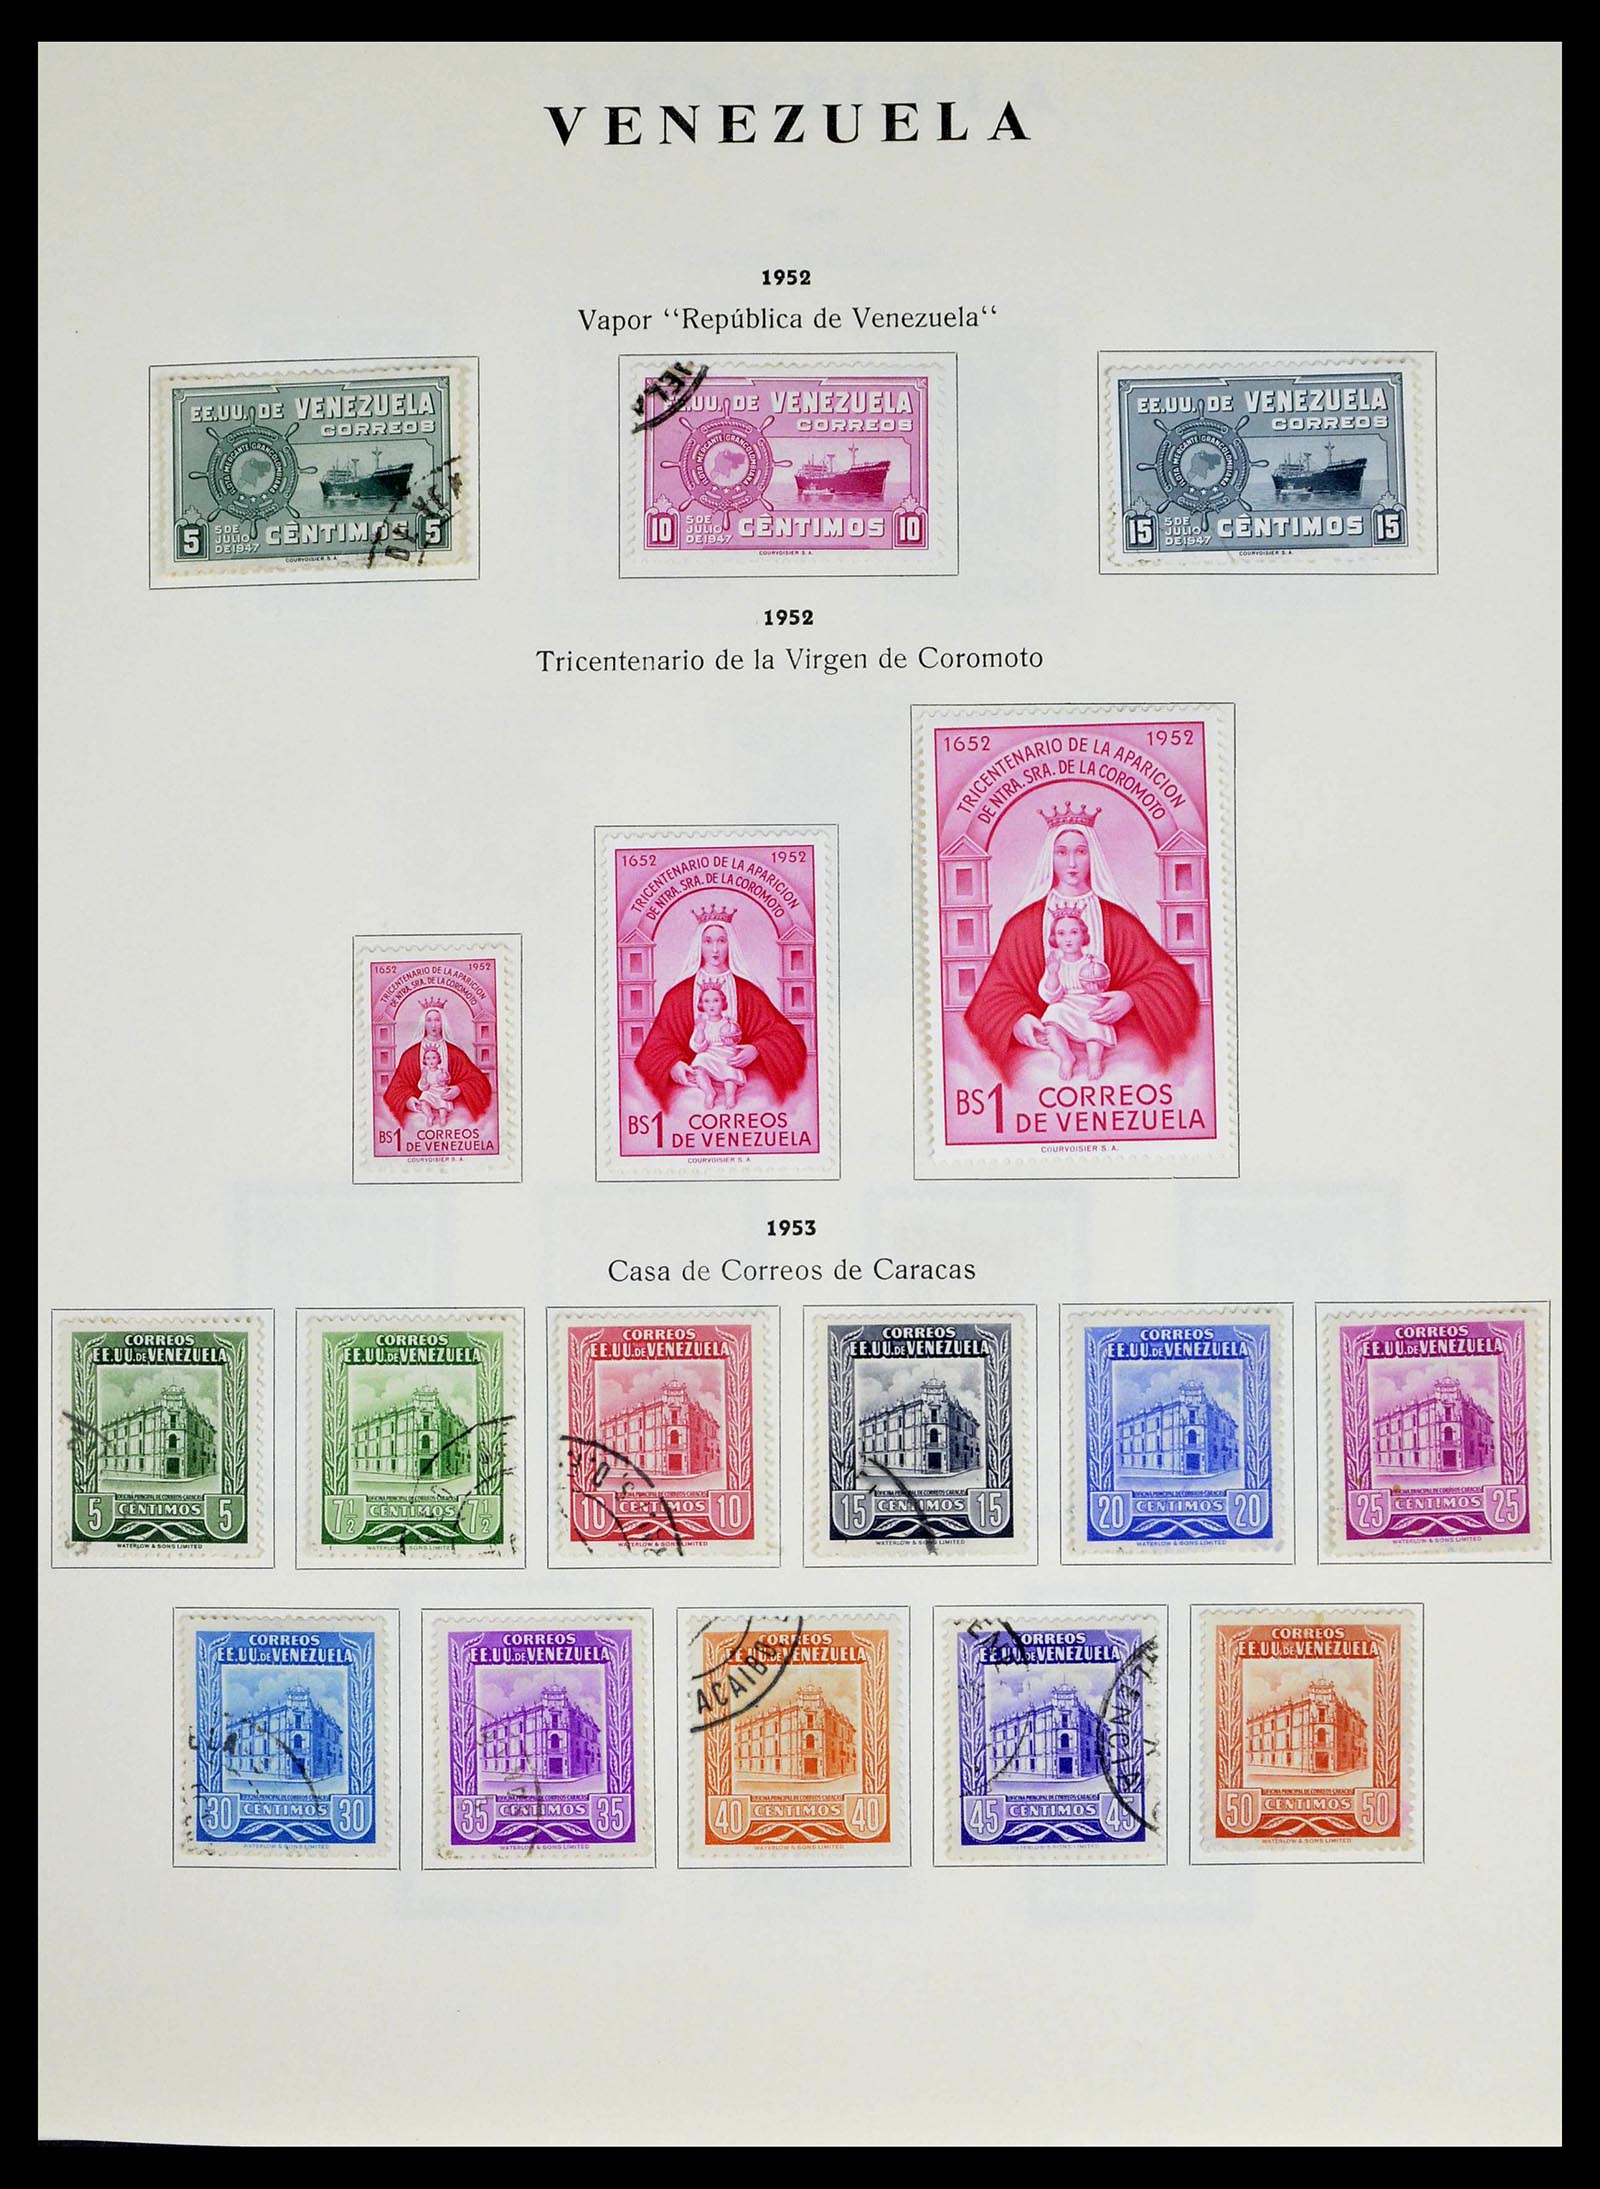 39223 0030 - Stamp collection 39223 Venezuela 1859-1984.